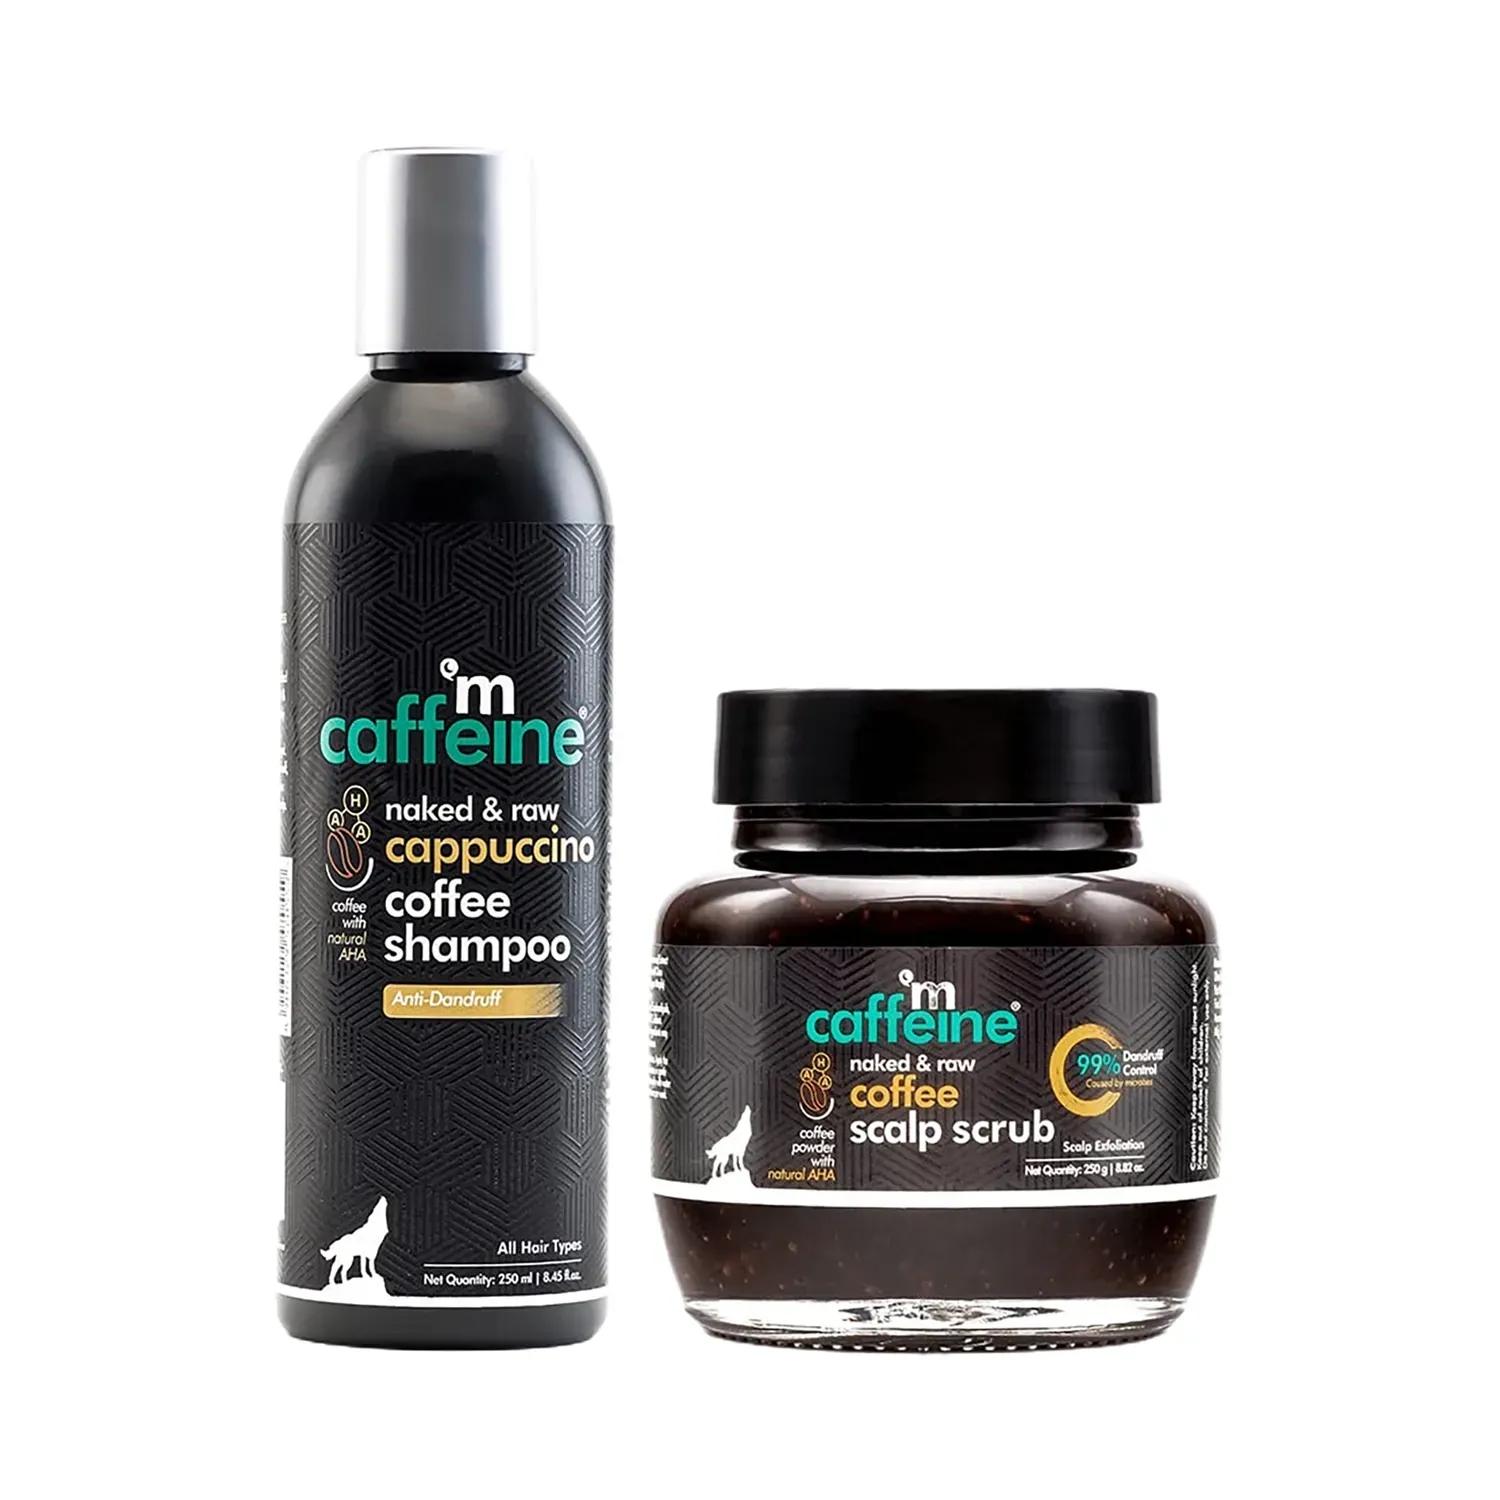 mcaffeine ultimate dandruff care kit - (2 pcs)